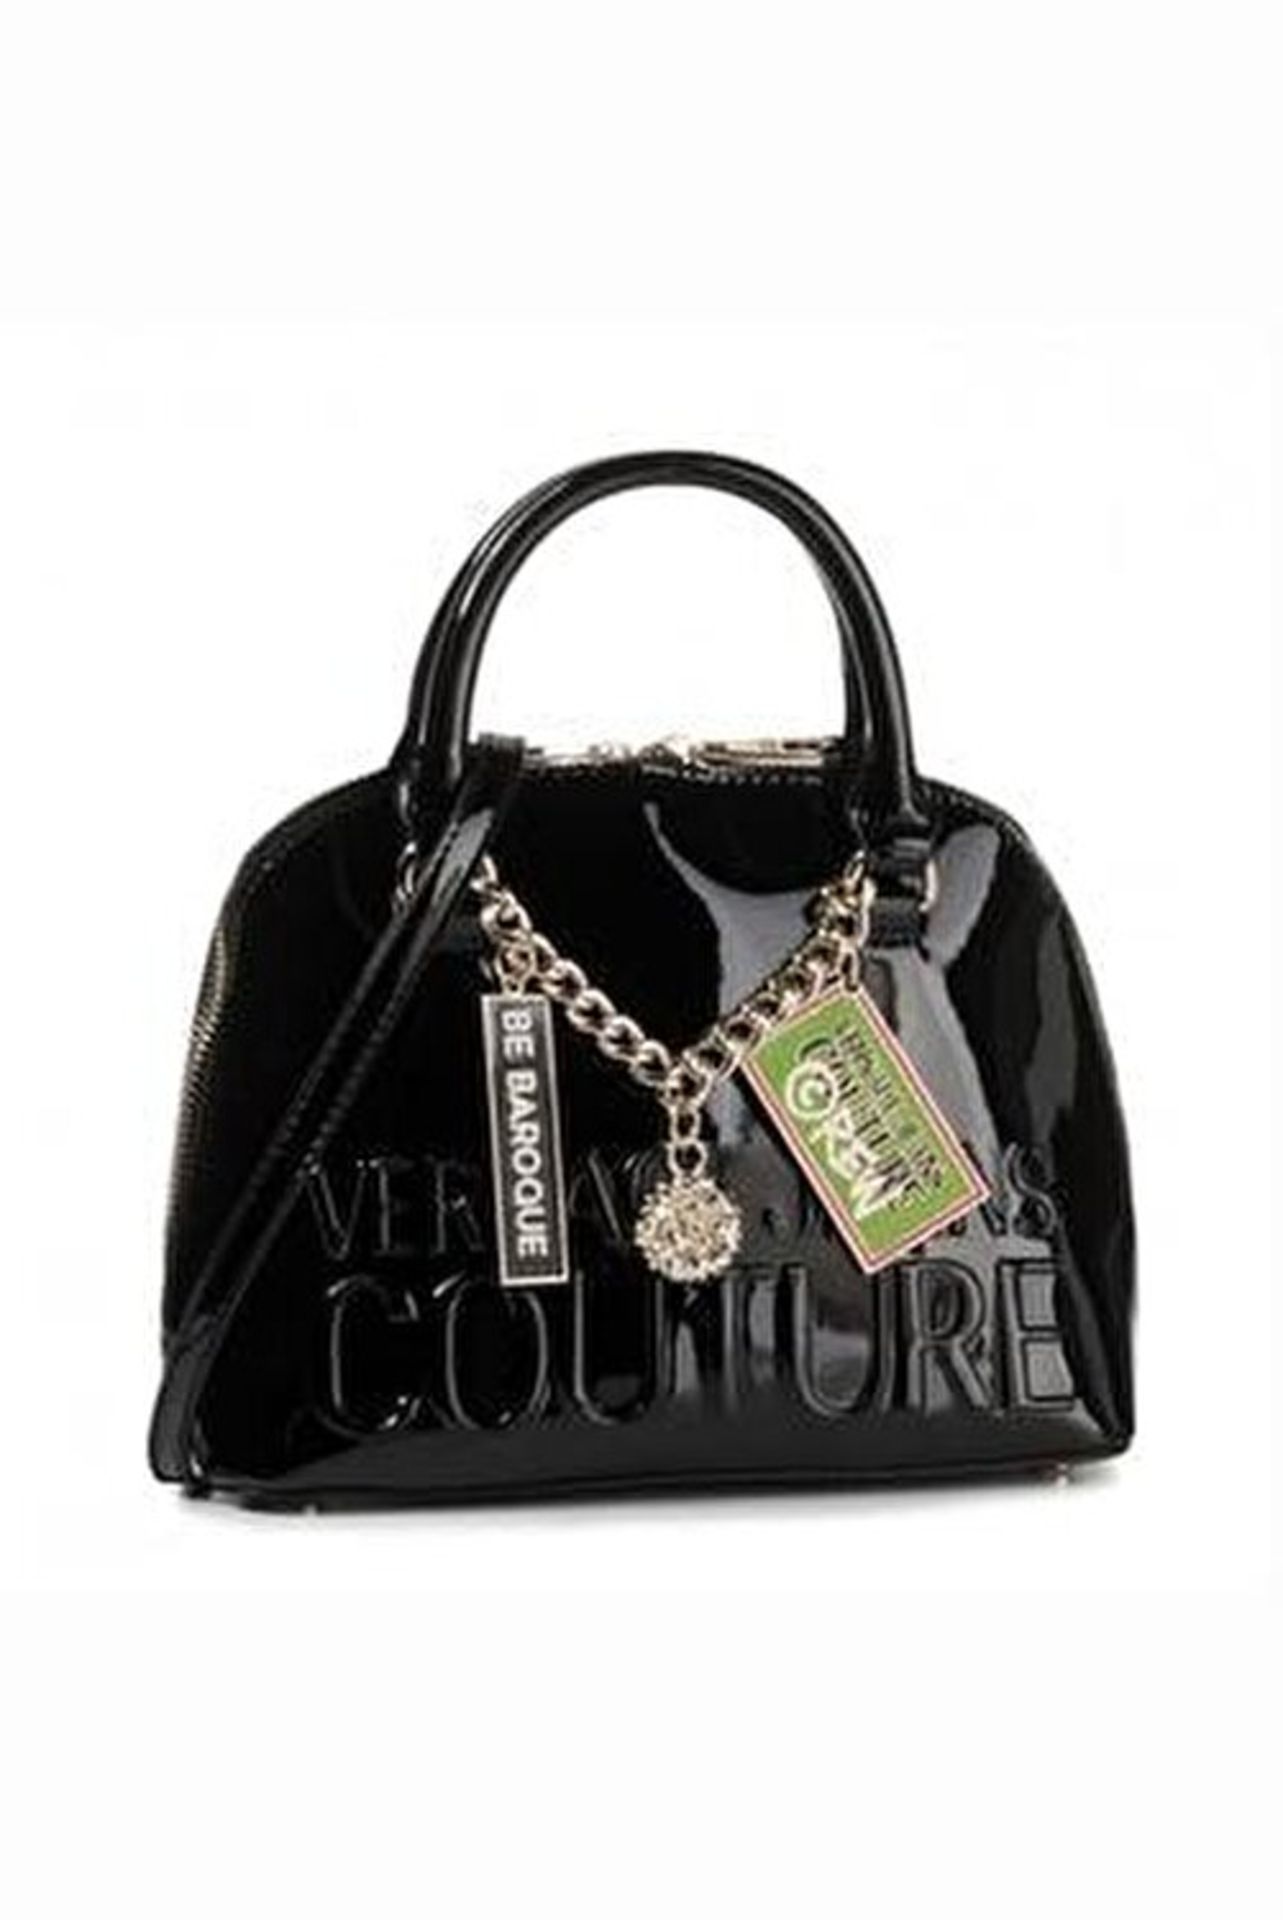 Versace Jeans Couture Vernice Handbag. RRP £235.00